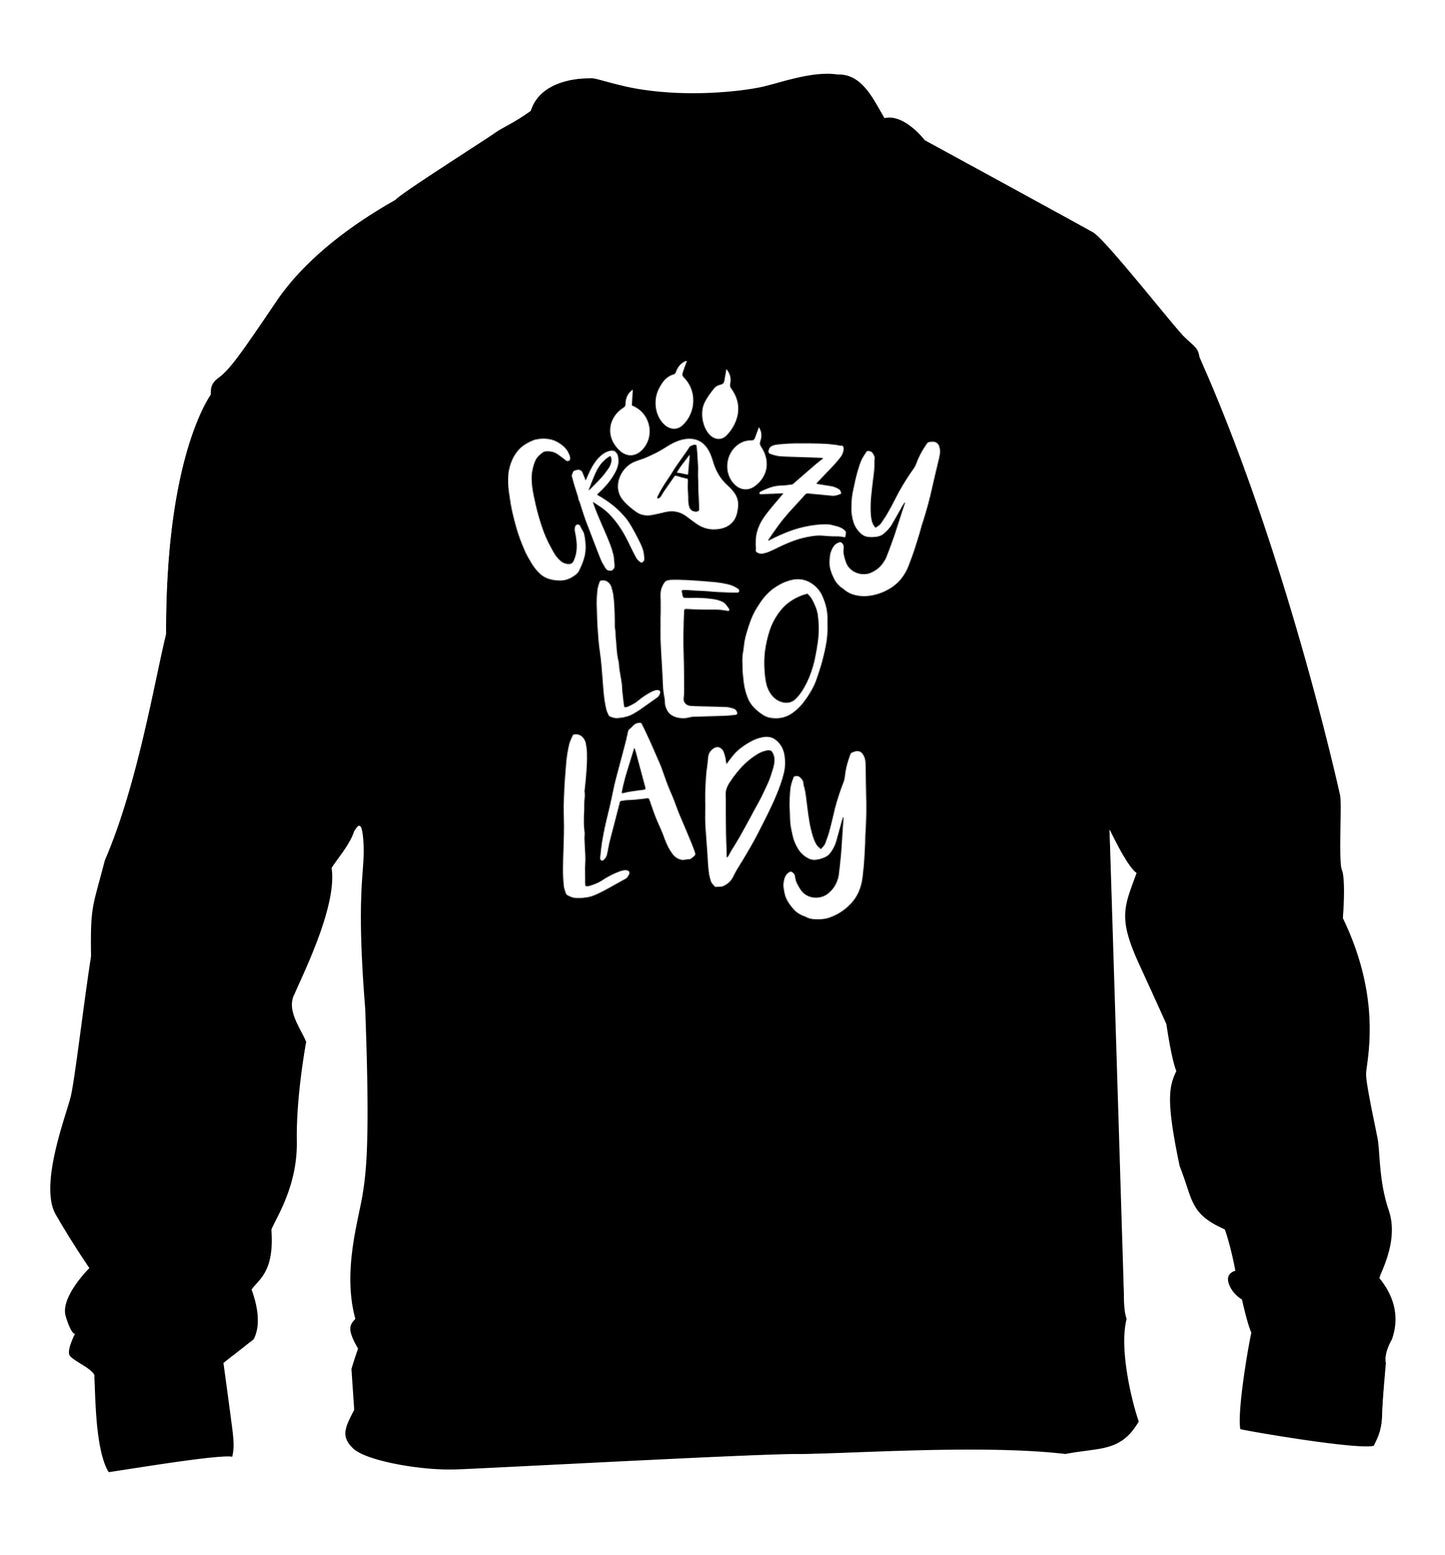 Crazy leo lady children's black sweater 12-13 Years